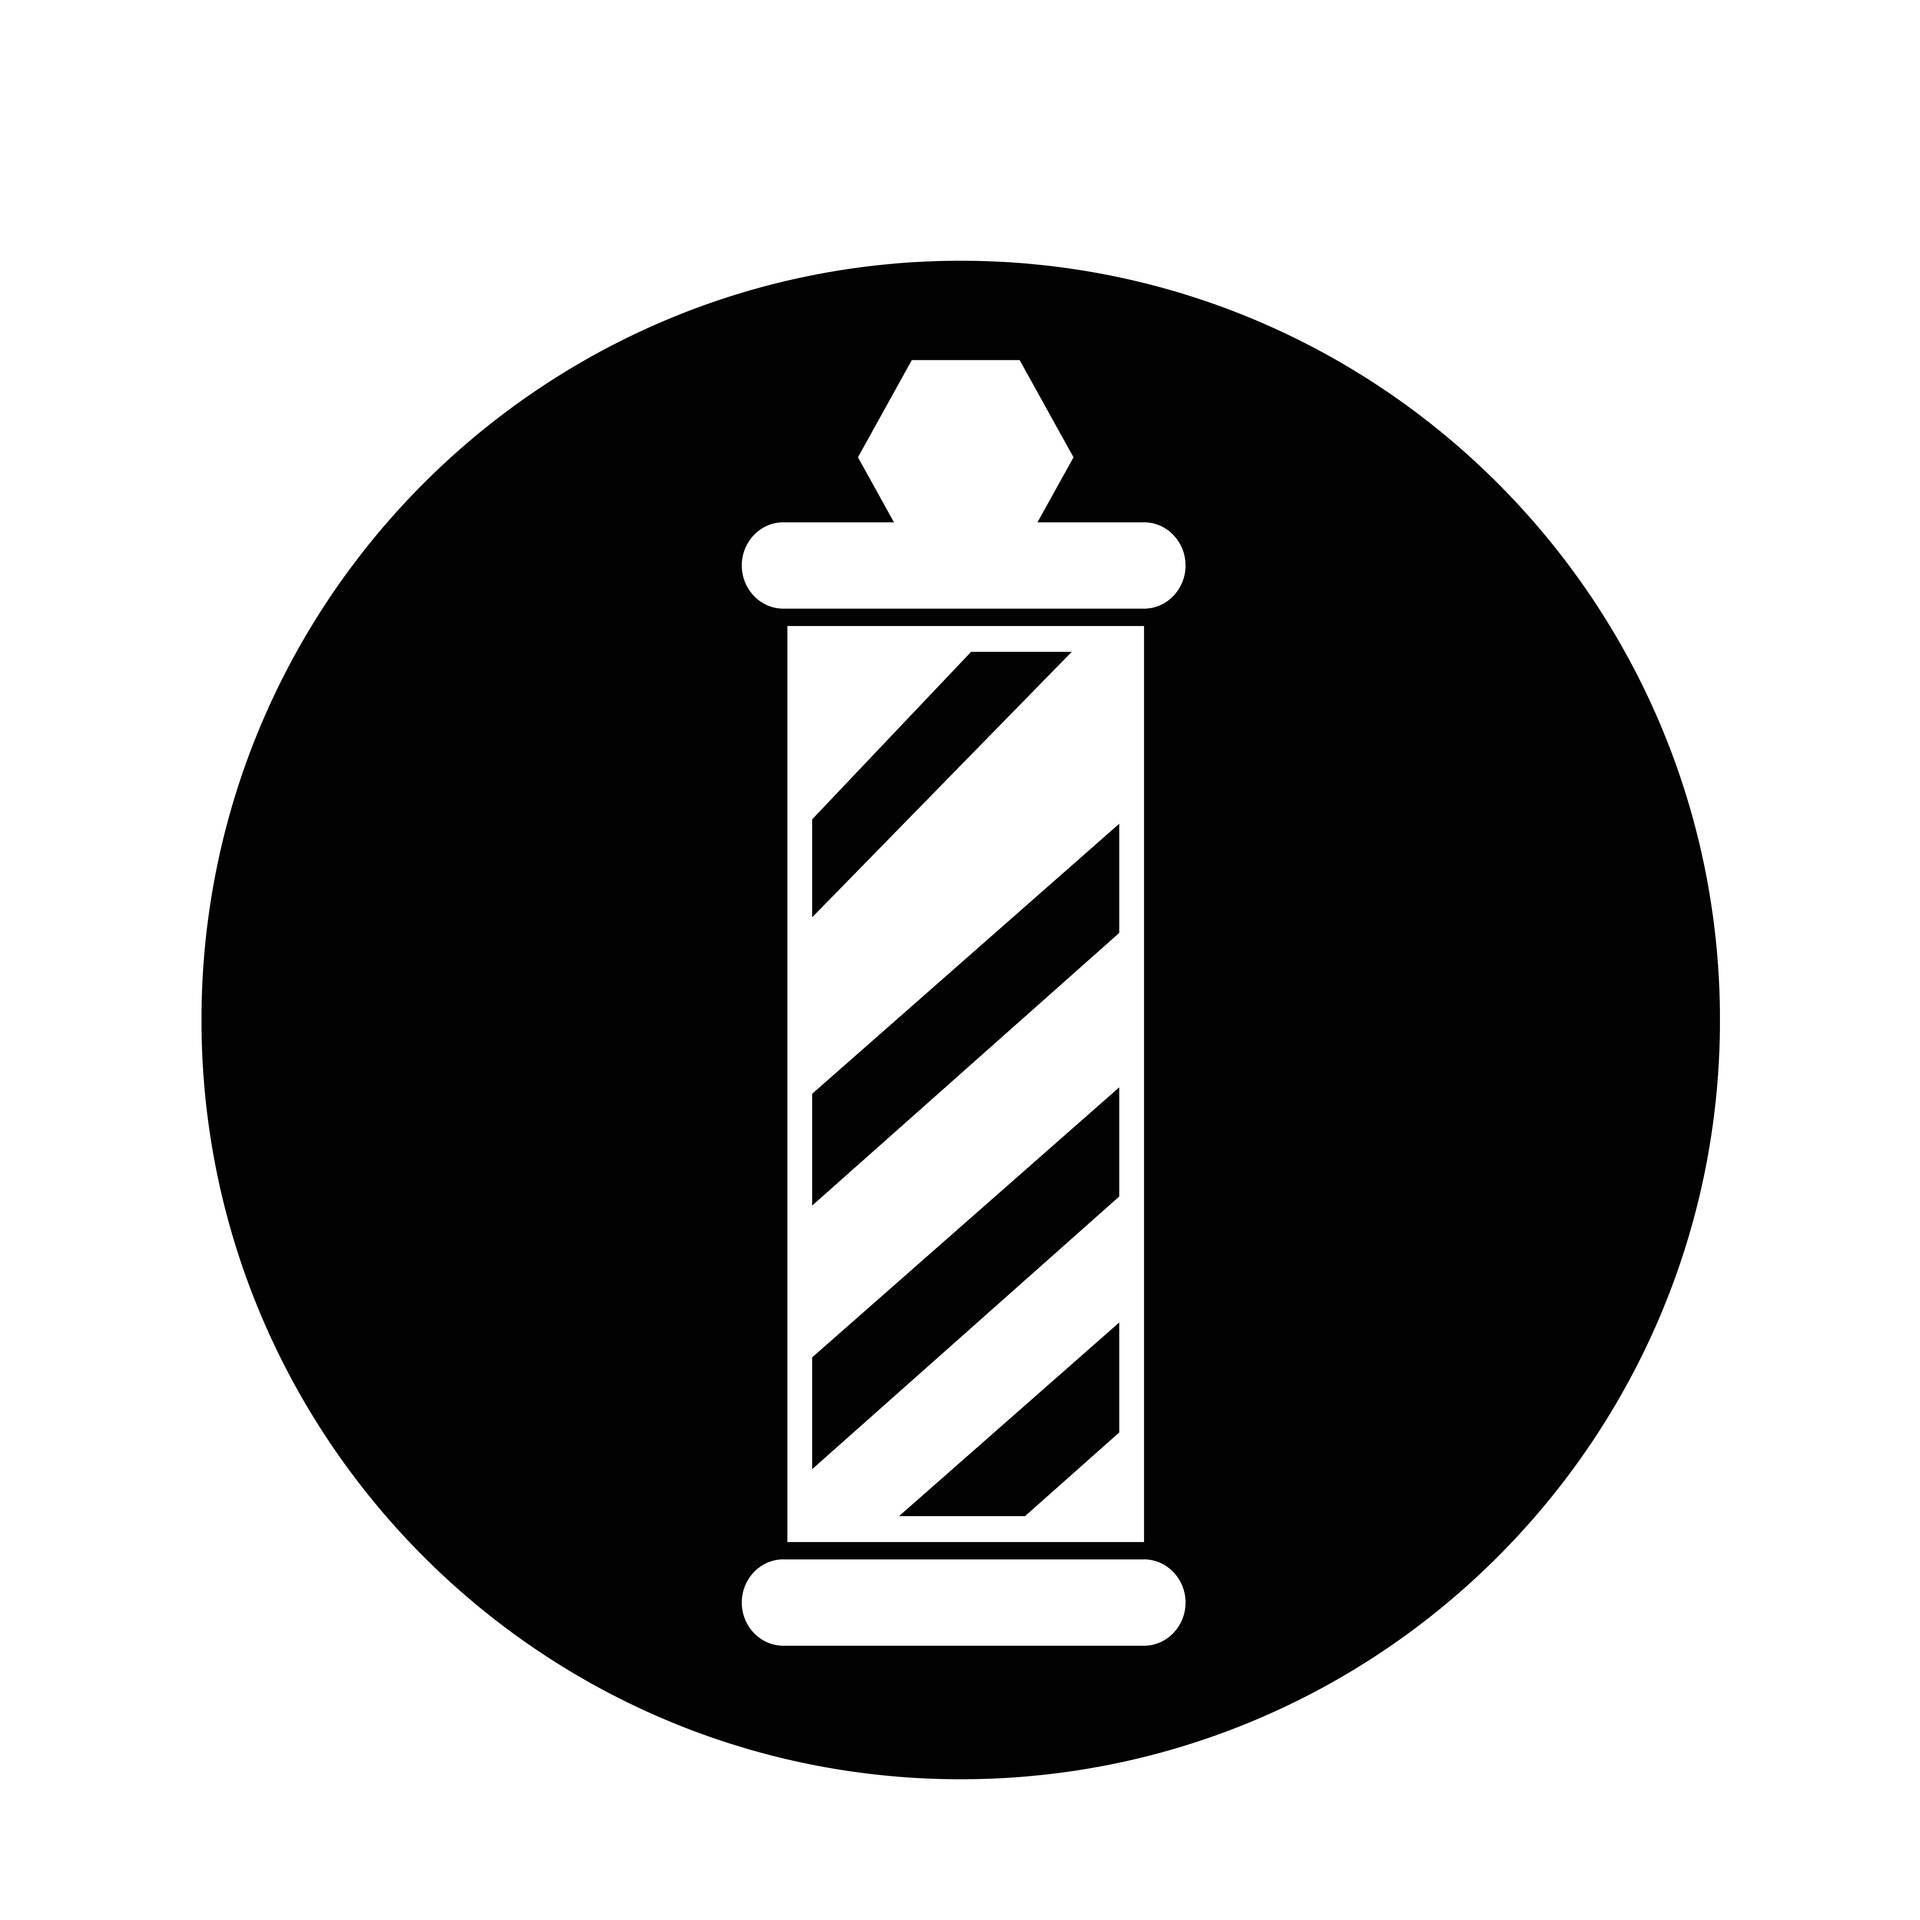 Classic Barber Pole Symbol.